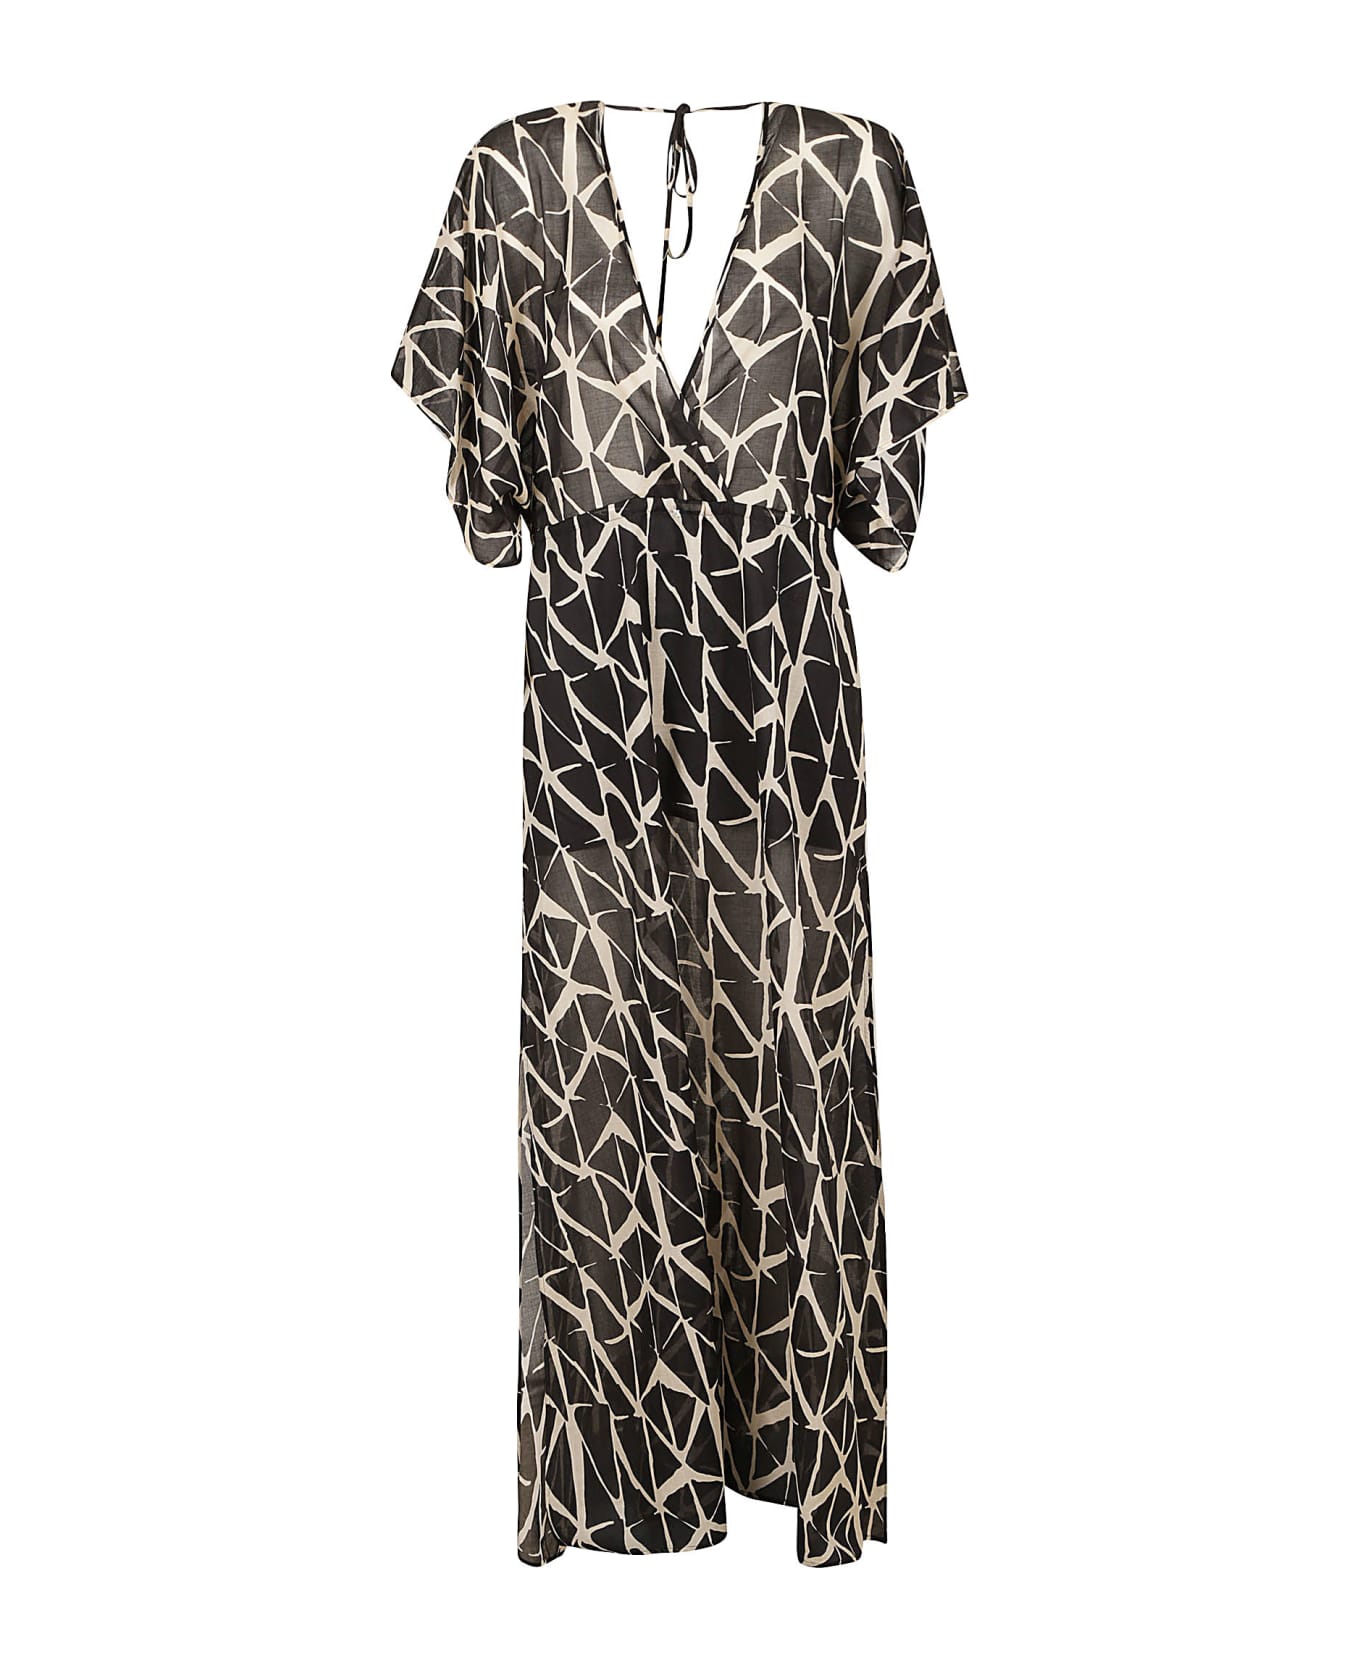 Lorena Antoniazzi V-neck Pattern Printed Dress - HWHITE/BLK